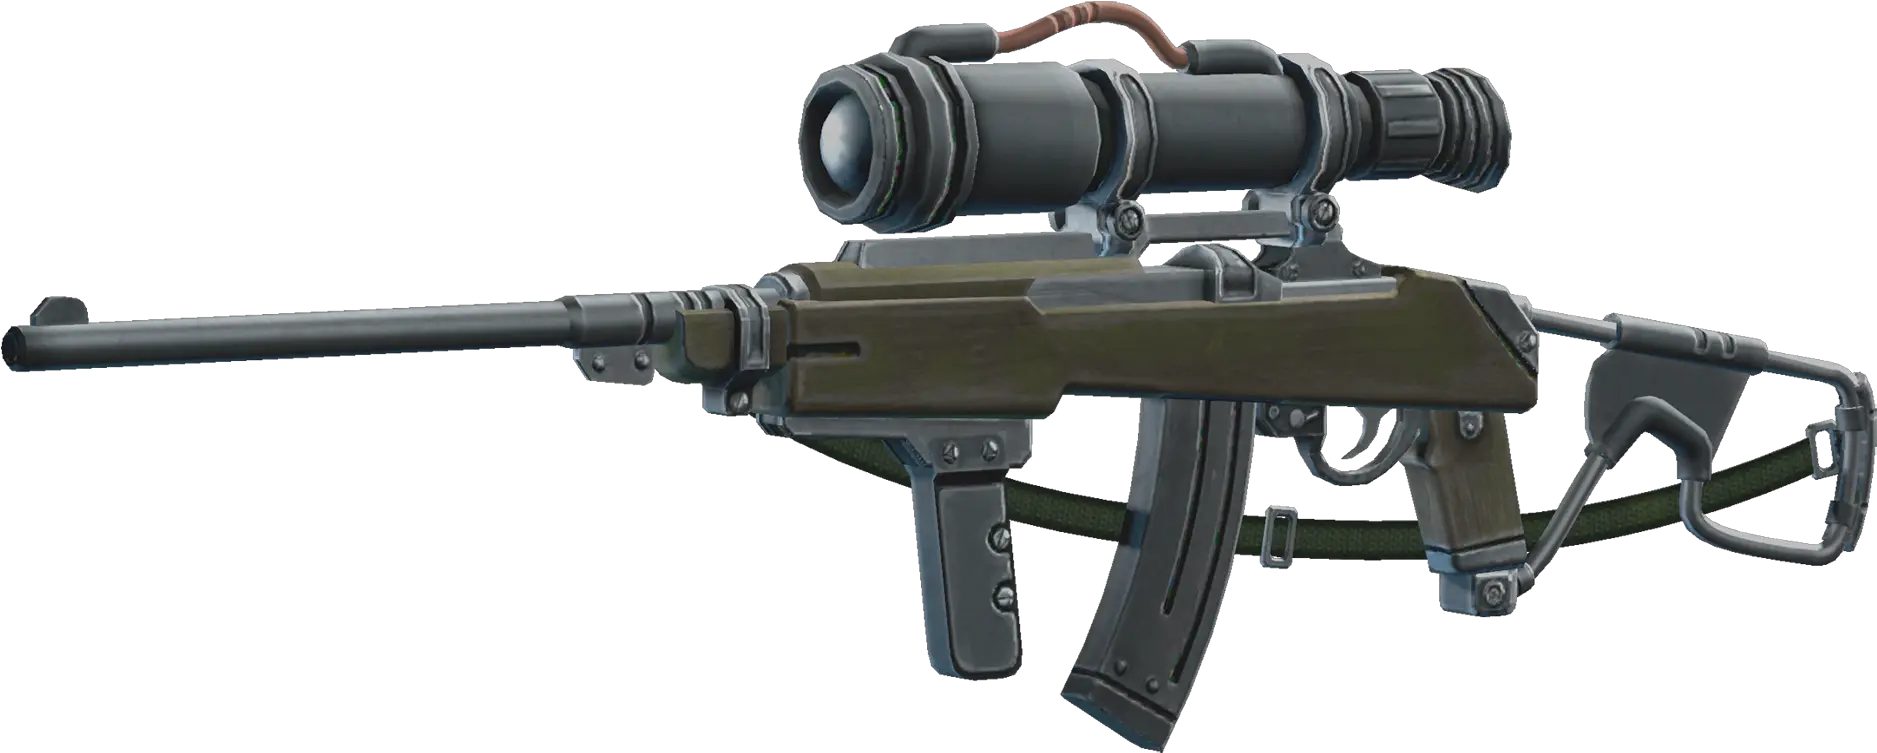 Game Gun Png Image Guns Images Latest Sniper Gun 2020 Sniper Scope Png